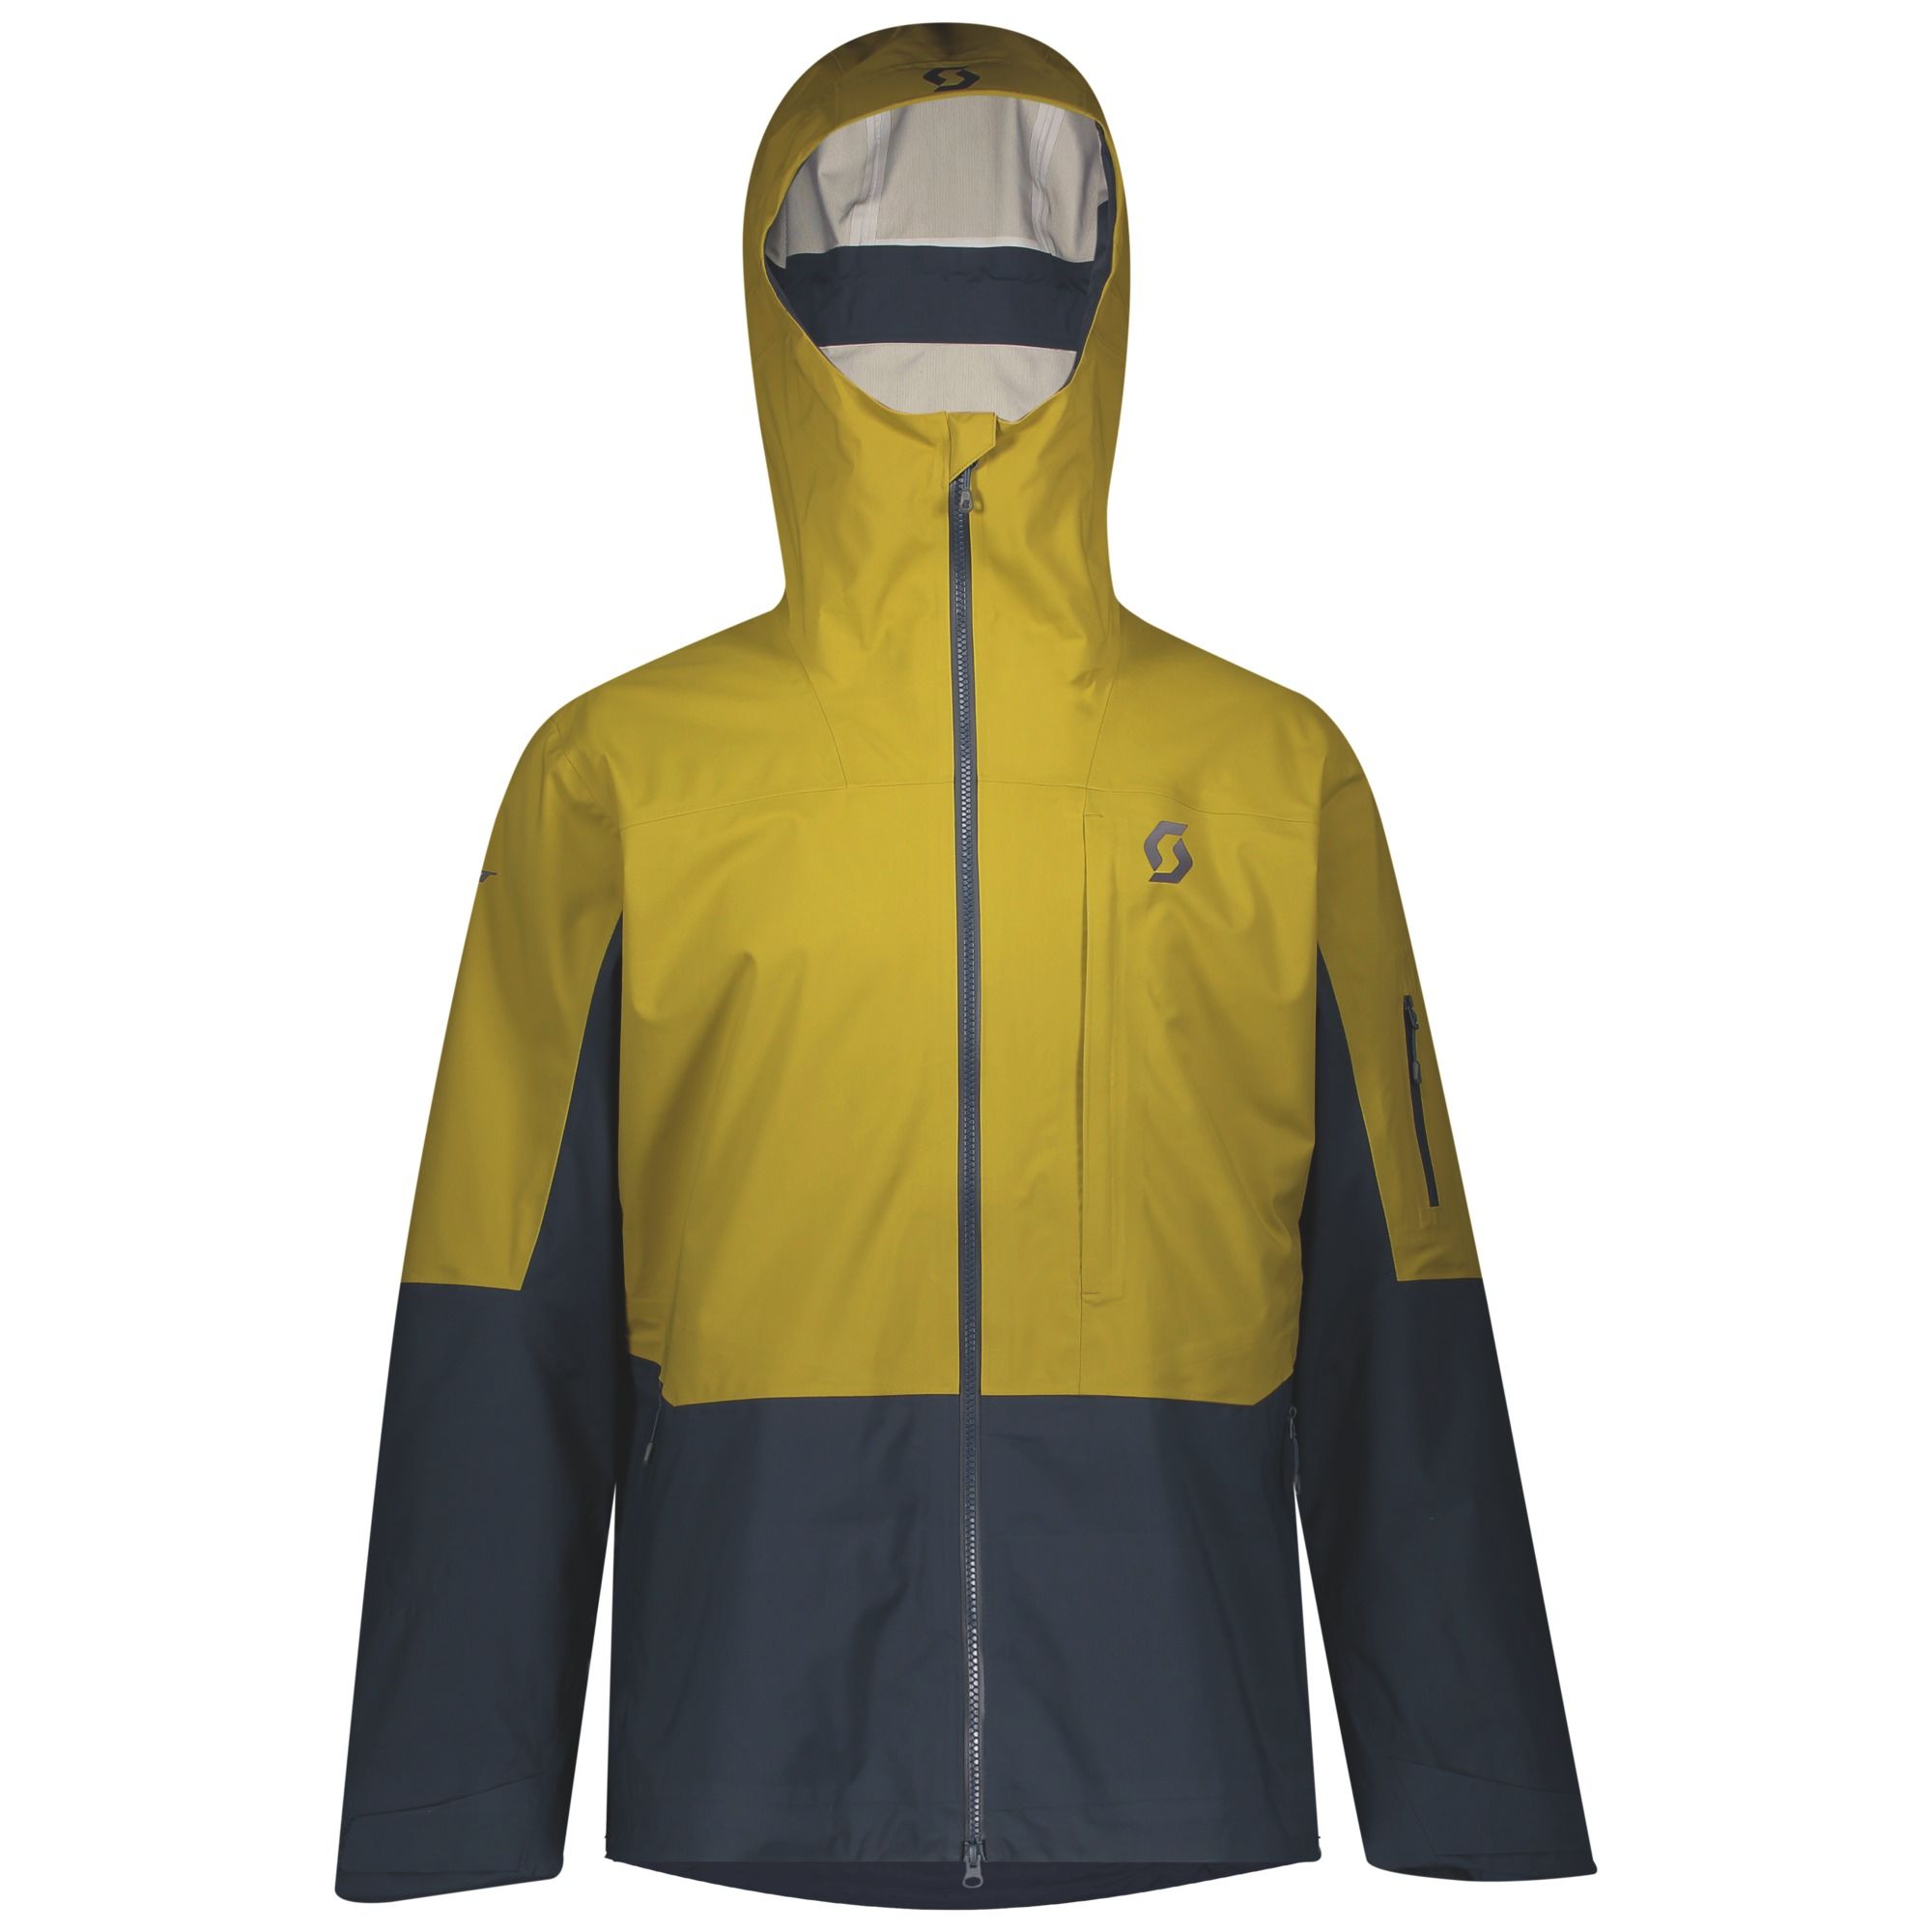 Mens Windbreaker XL Blue Yellow Windbreaker Mens Sports Jacket 